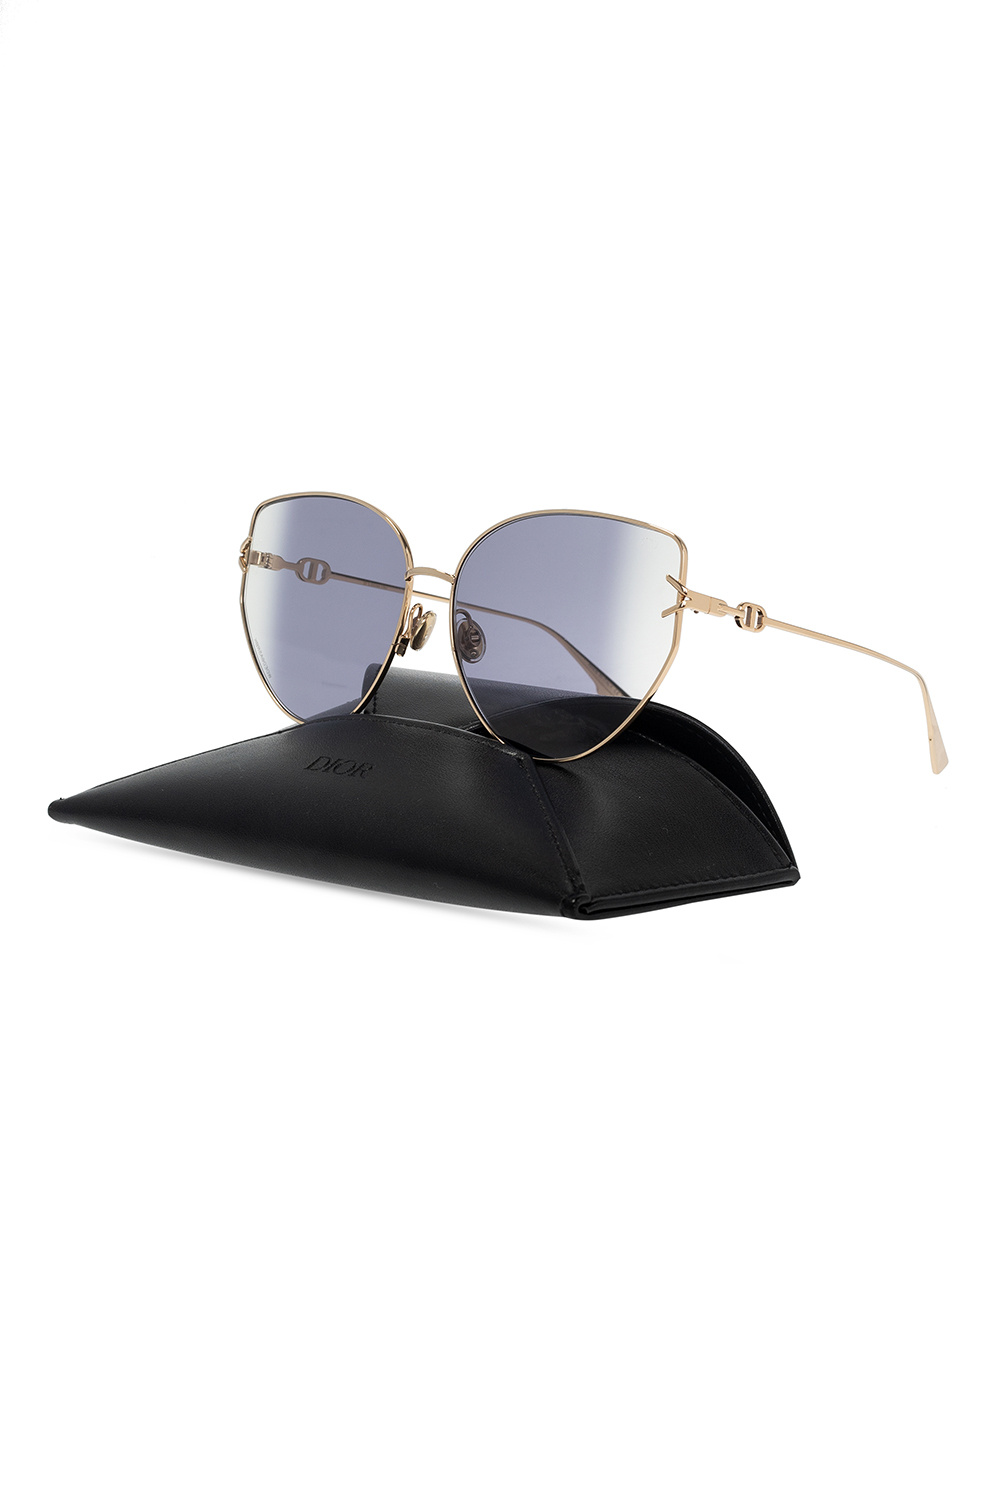 Dior ‘Gipsy 2’ sunglasses